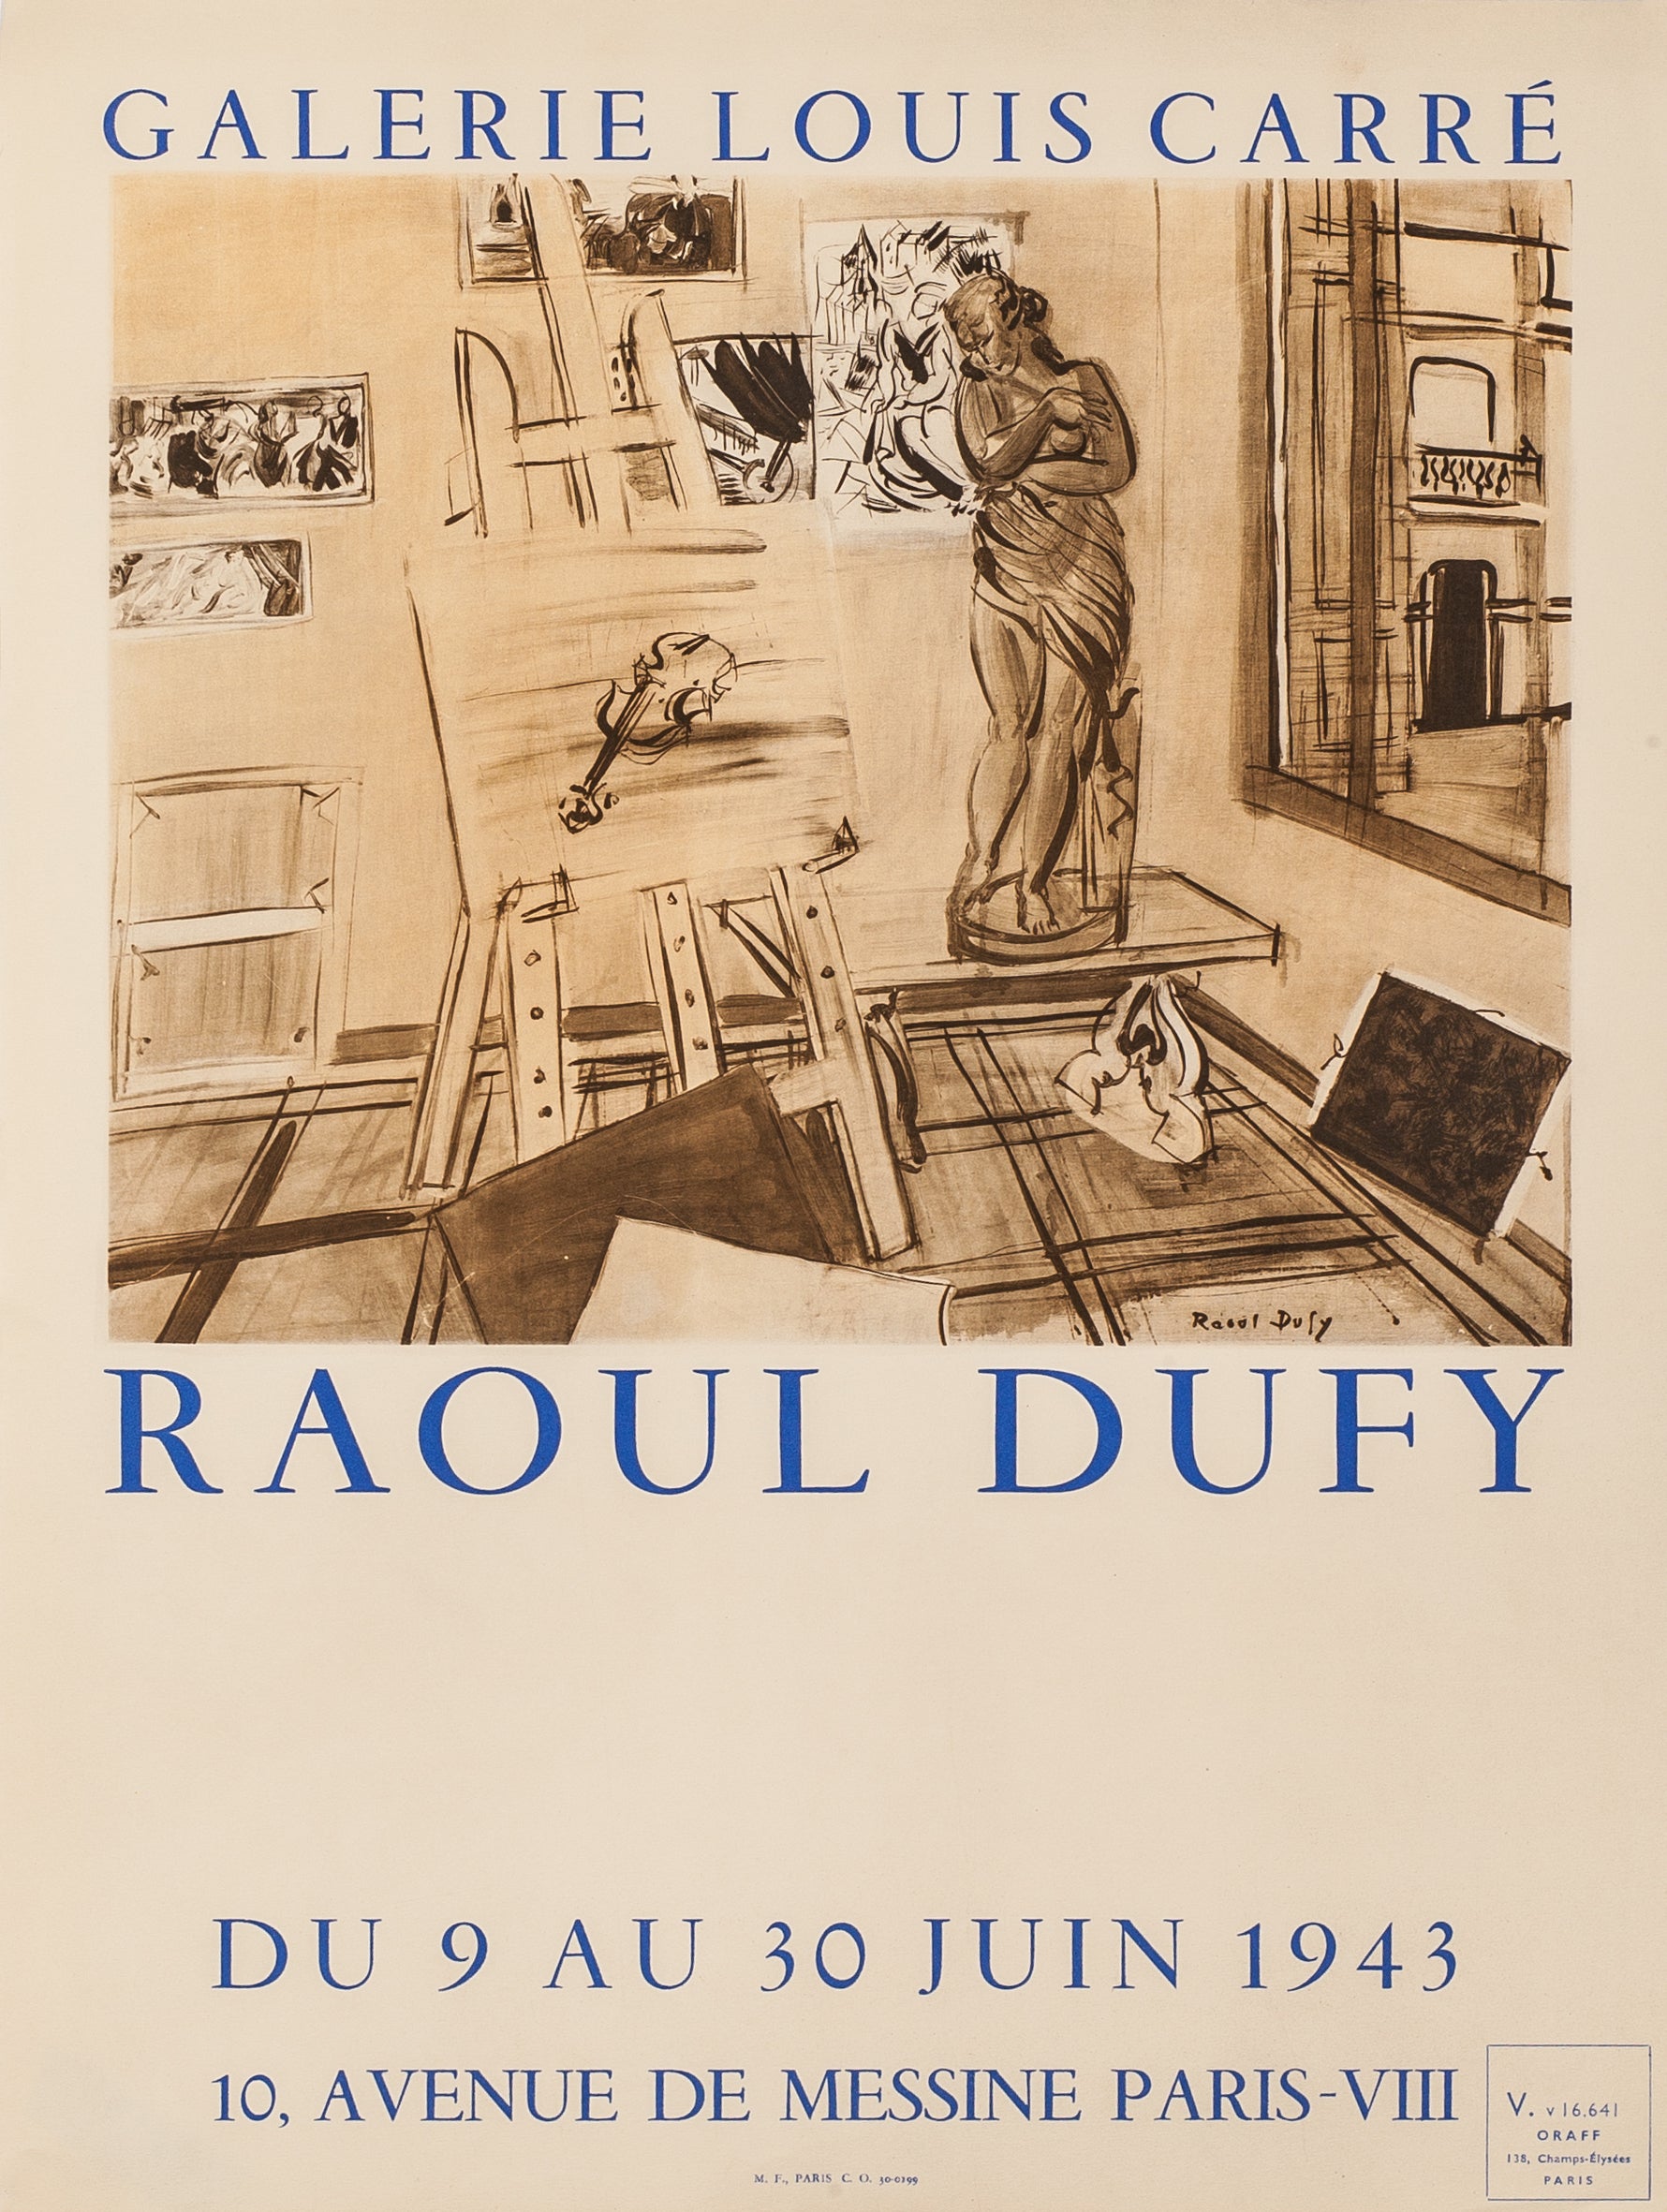 MOURLOT EDITIONS: Galerie Louis Carré by Raoul Dufy – Mourlot Editions